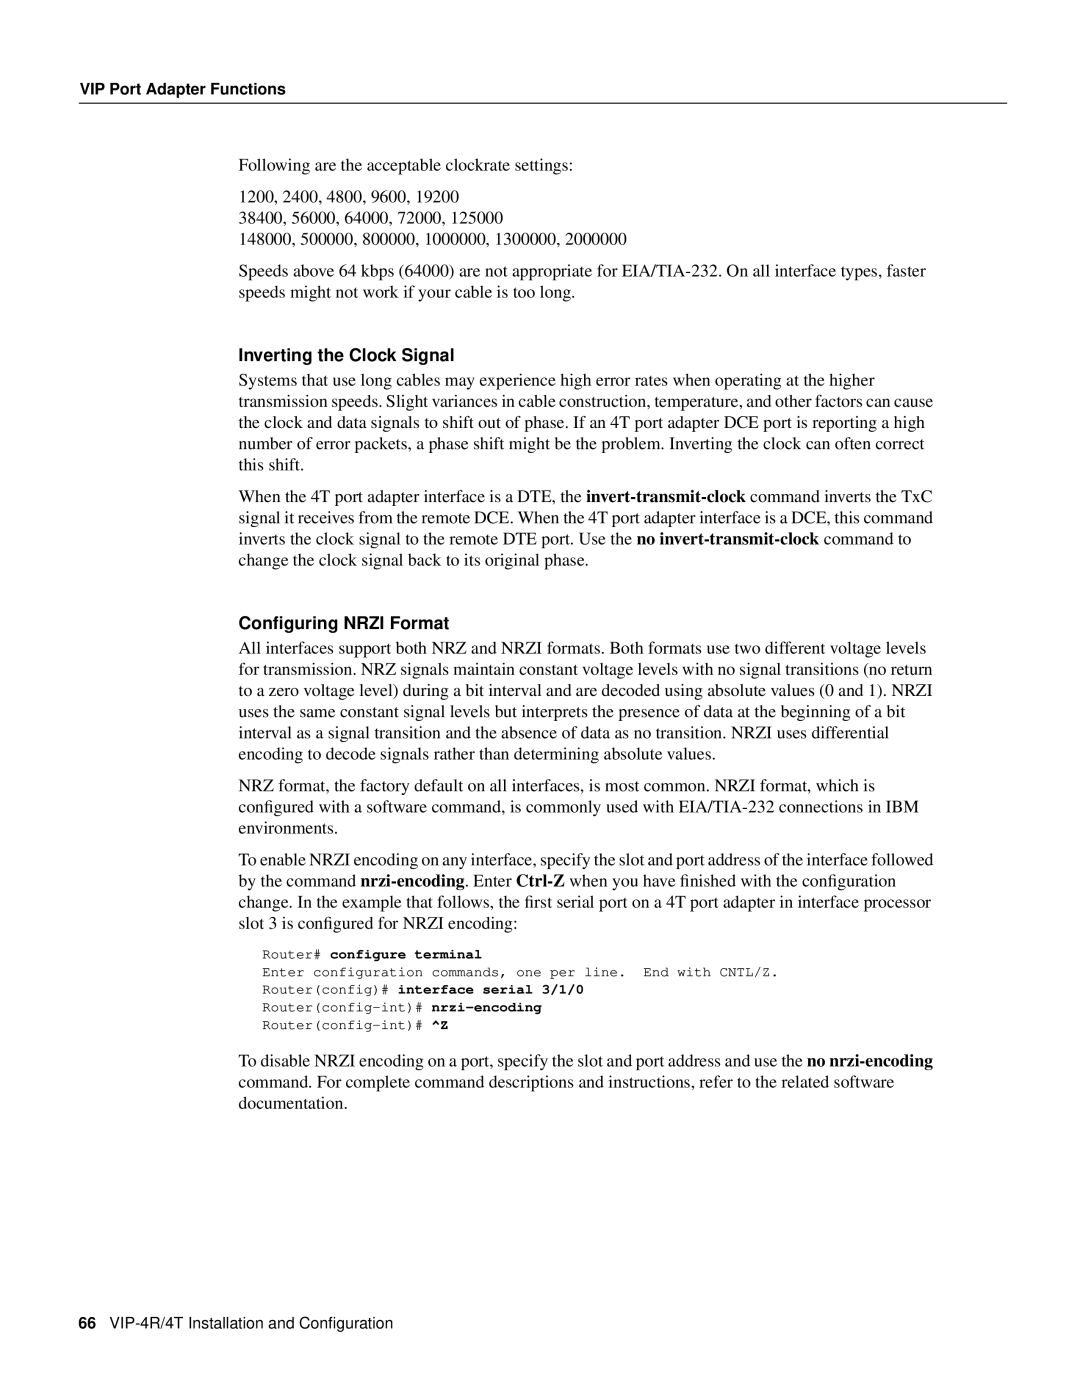 Cisco Systems VIP-4R/4T manual Inverting the Clock Signal, Conﬁguring NRZI Format 